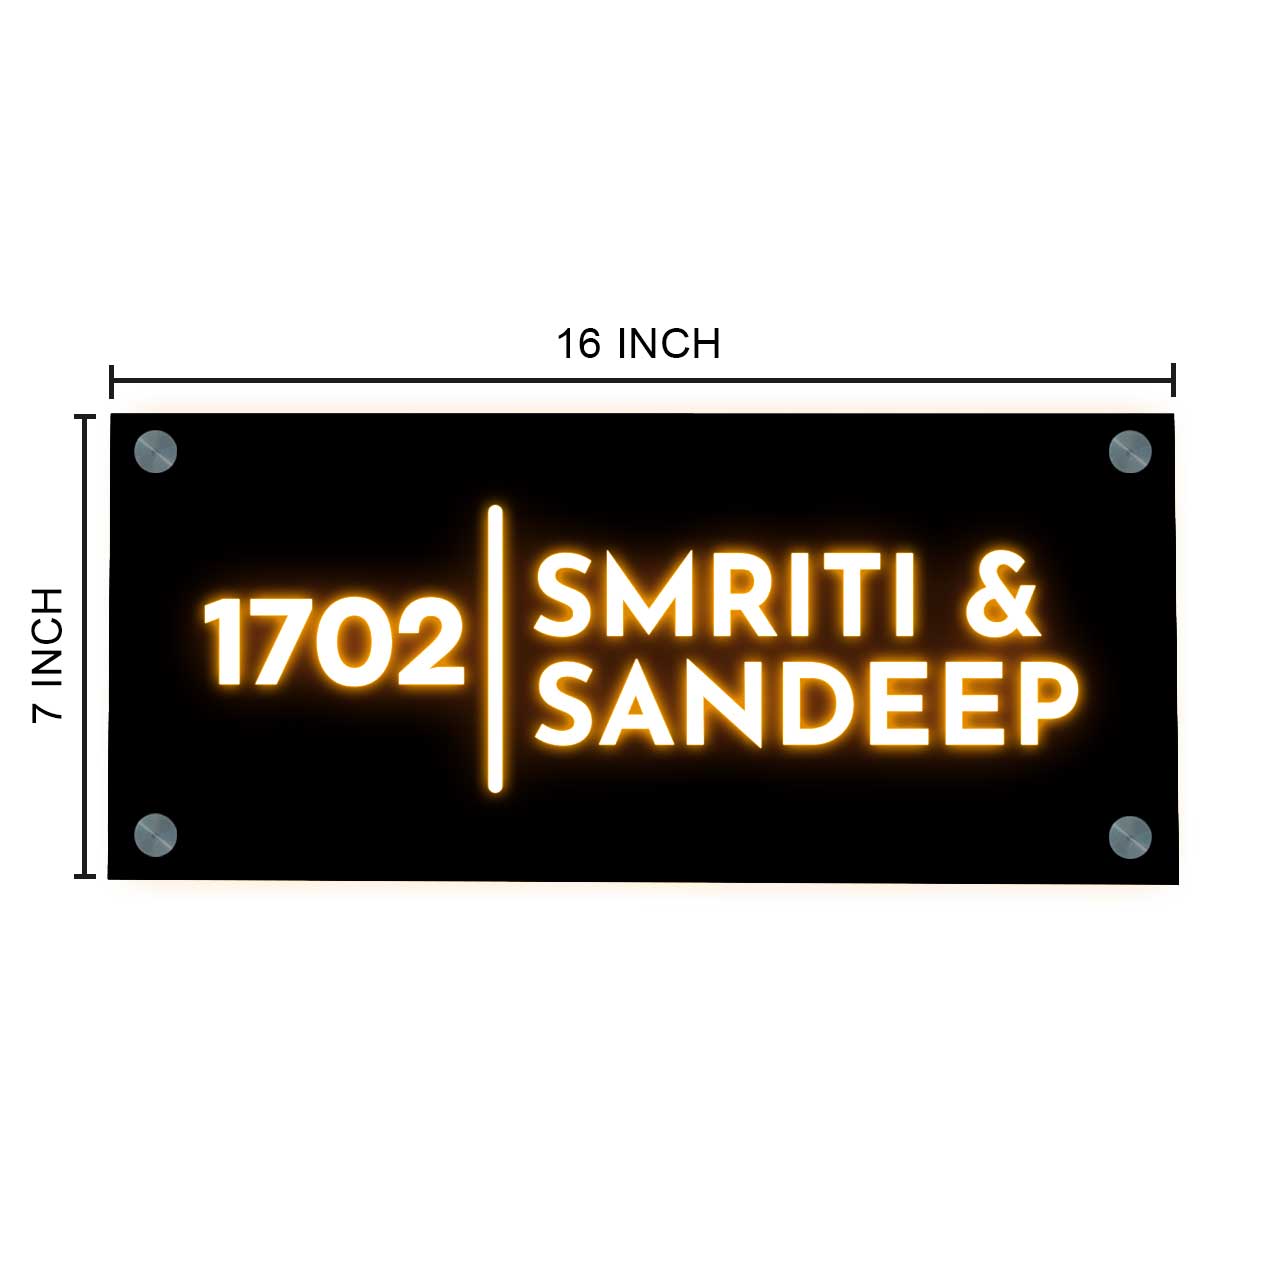  Led Light Name Plate for Home